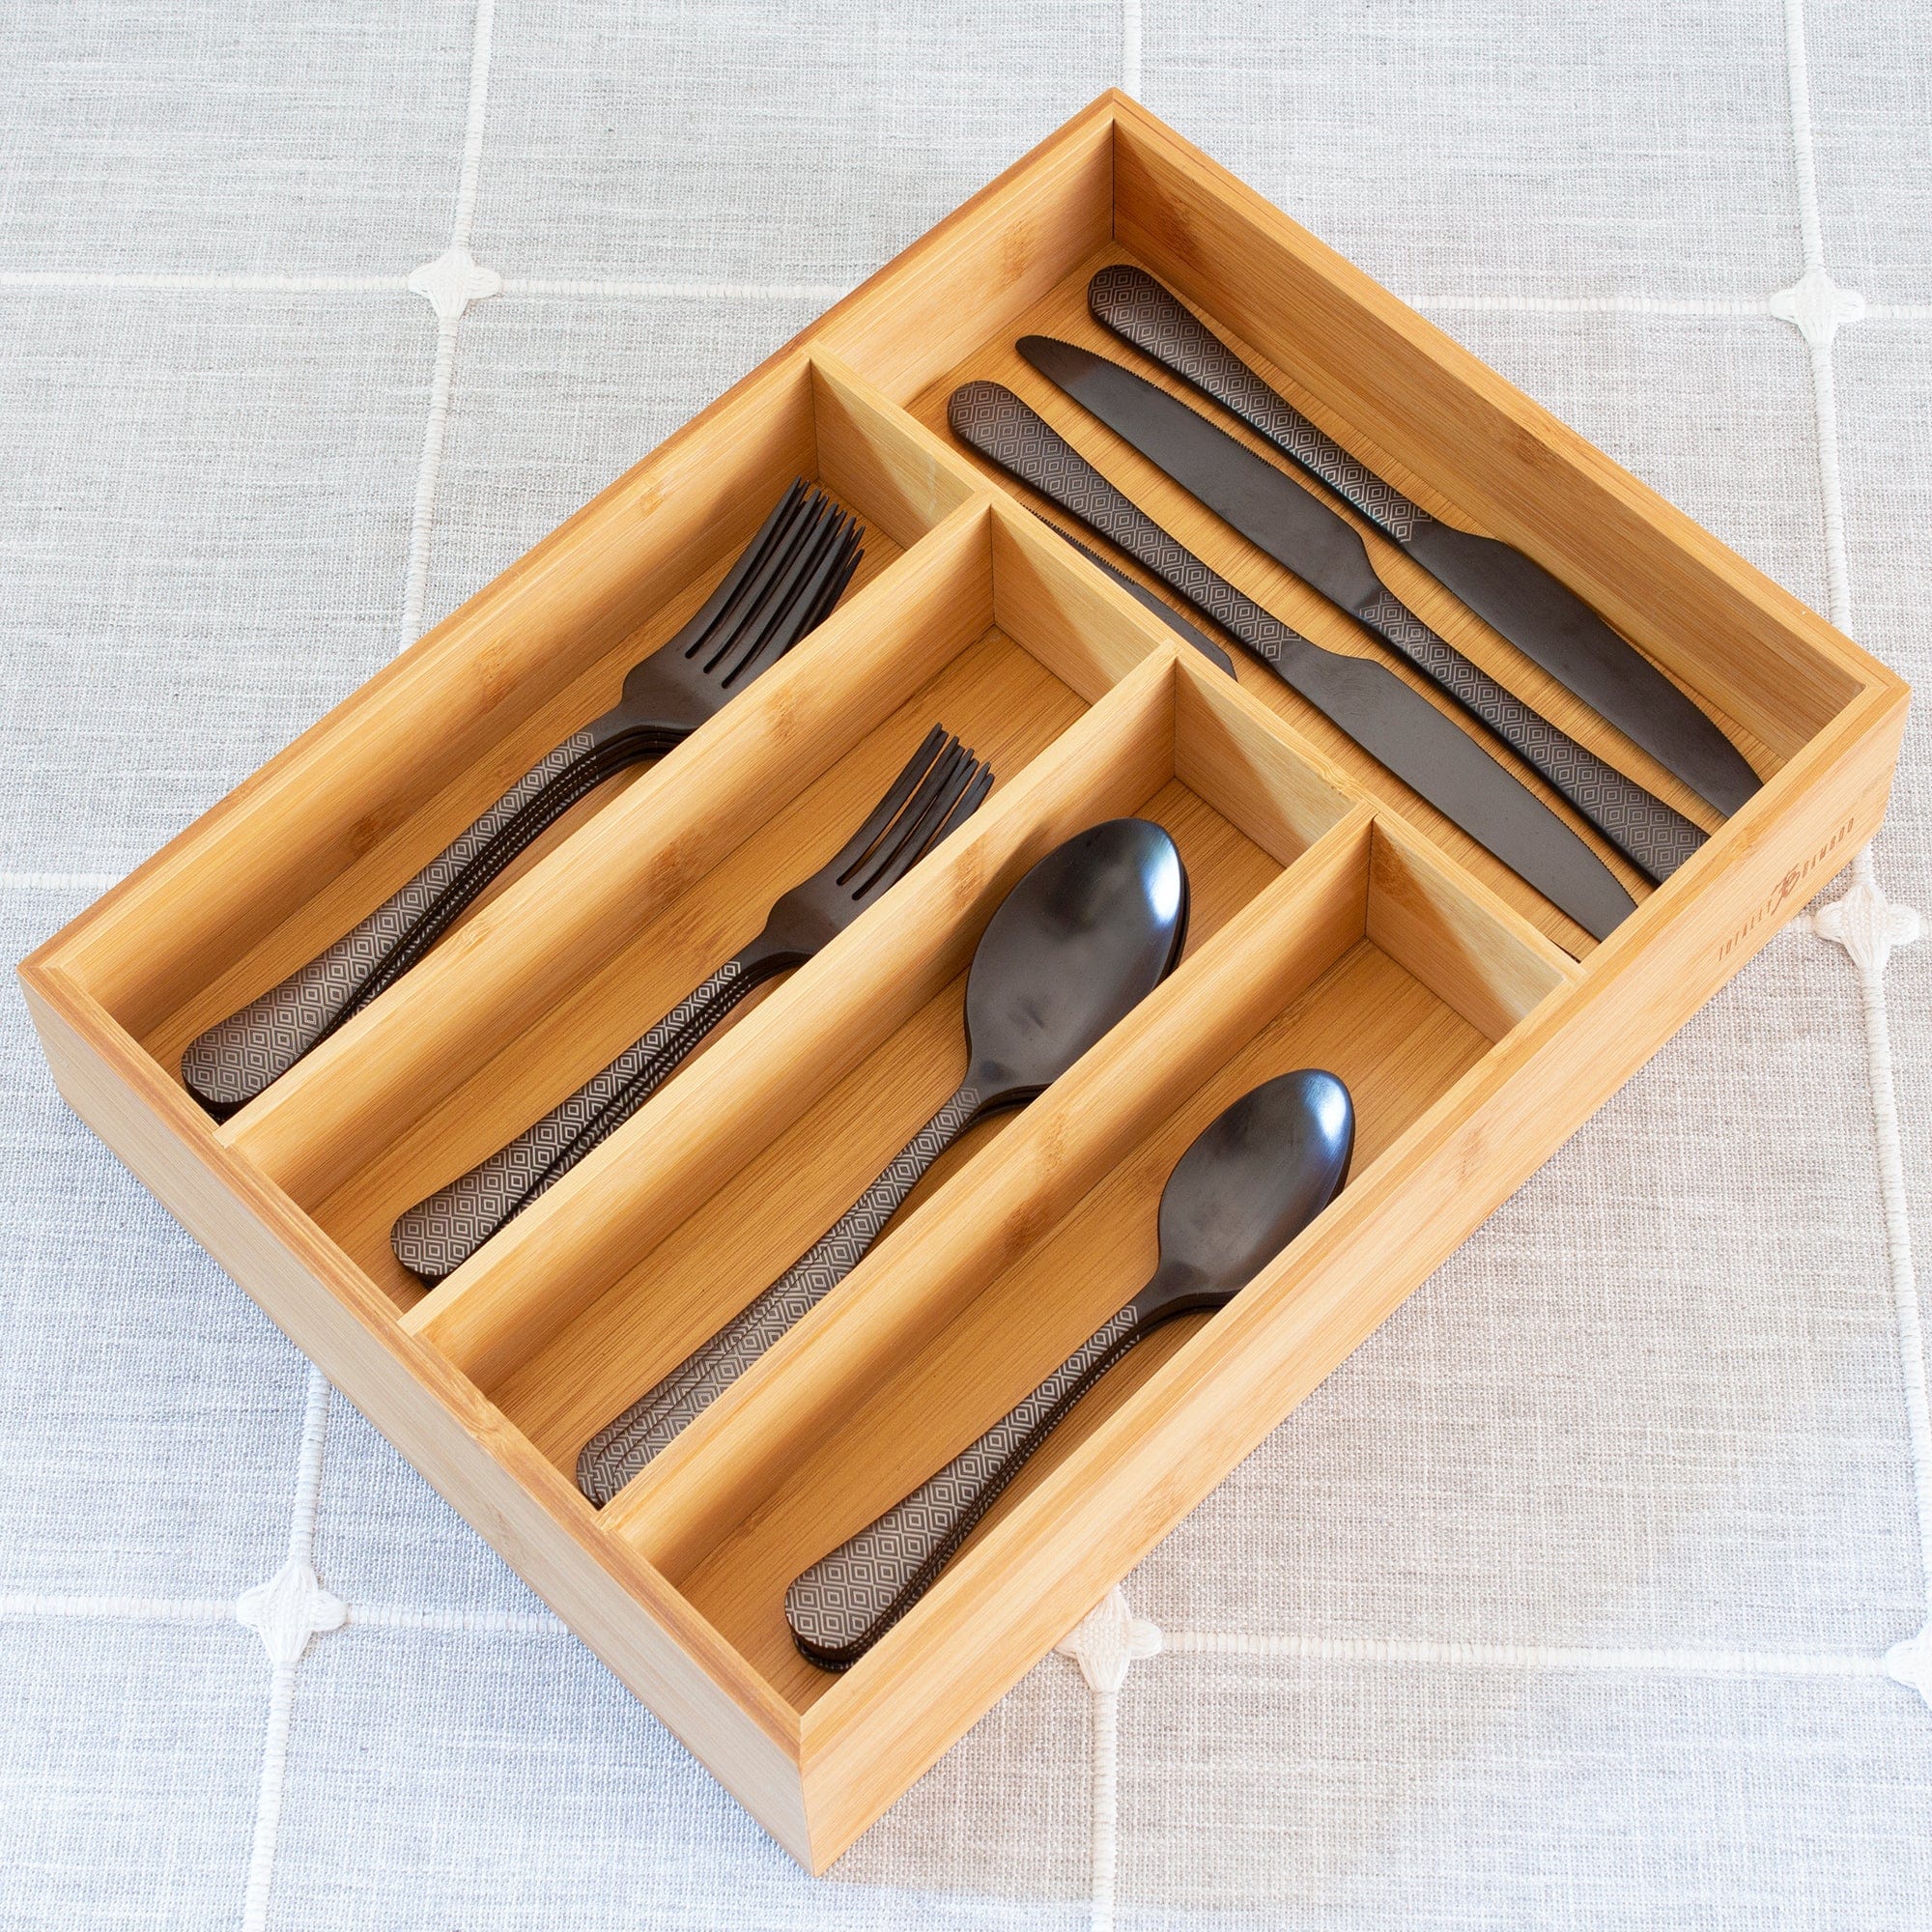 cutlery drawer